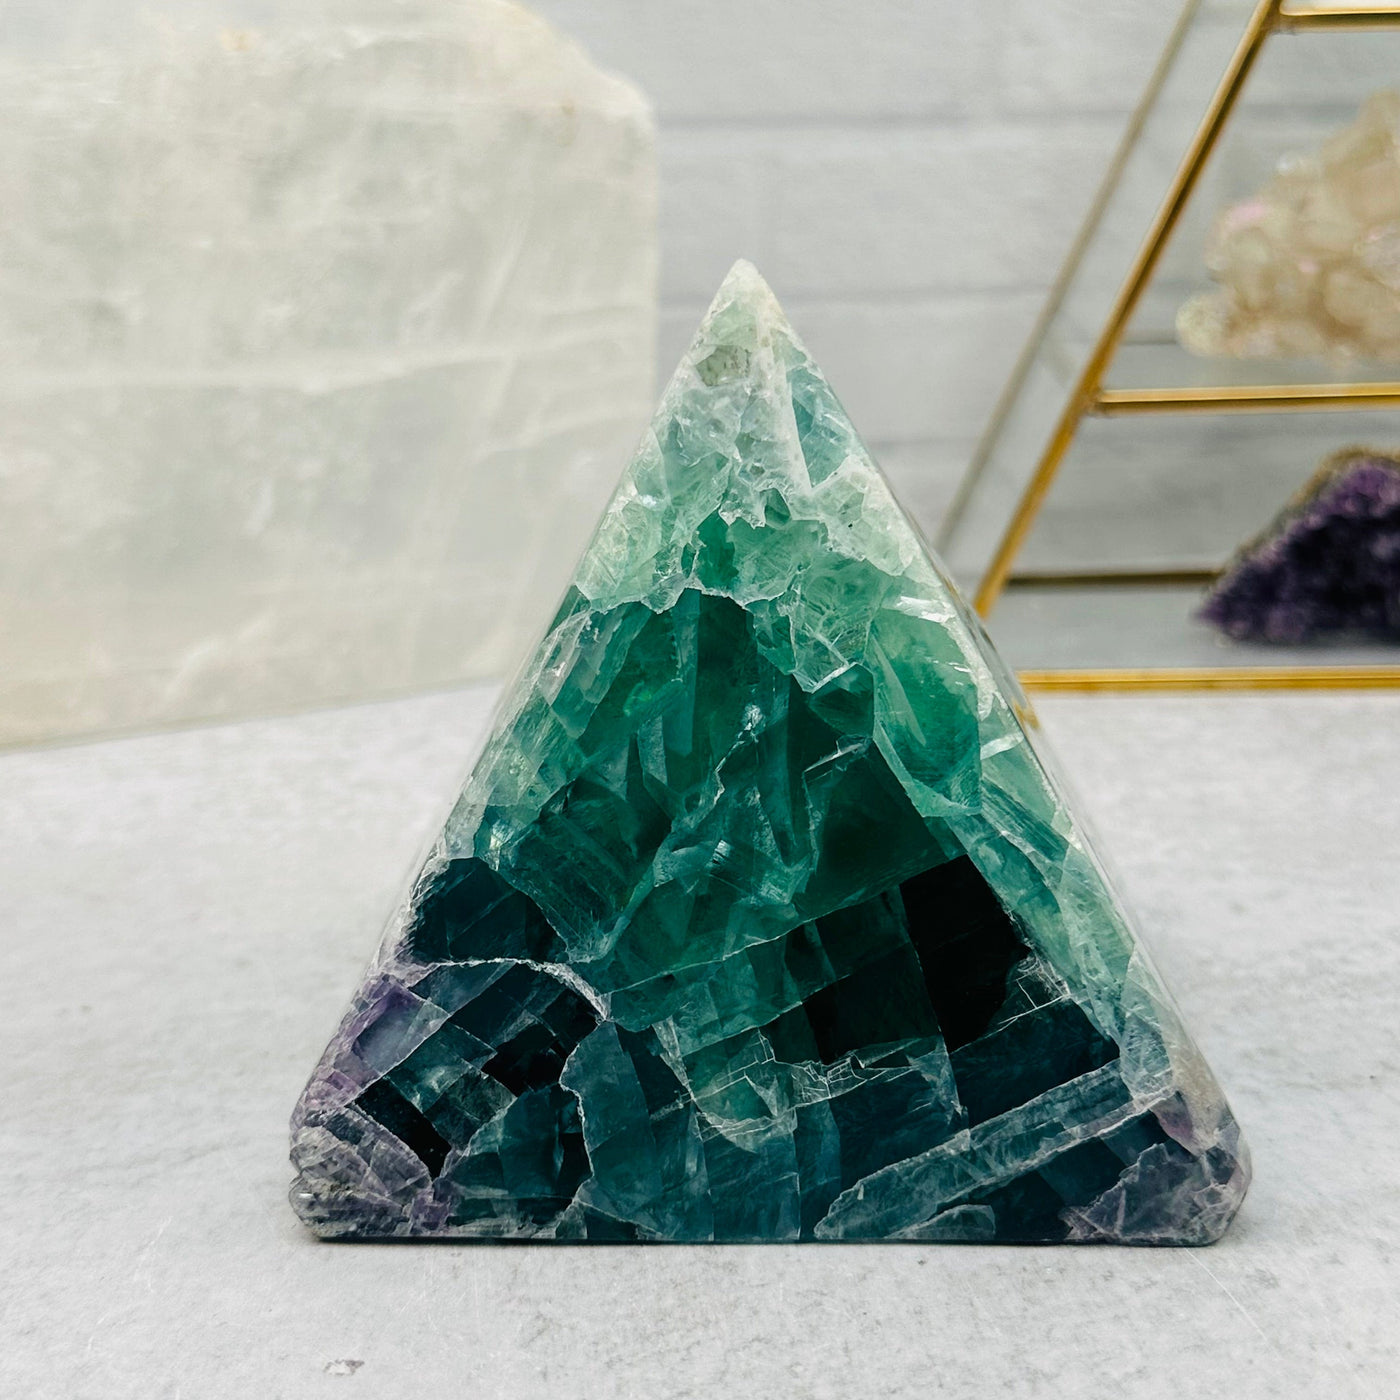 Large Rainbow Fluorite Pyramid Crystal displayed as home decor 